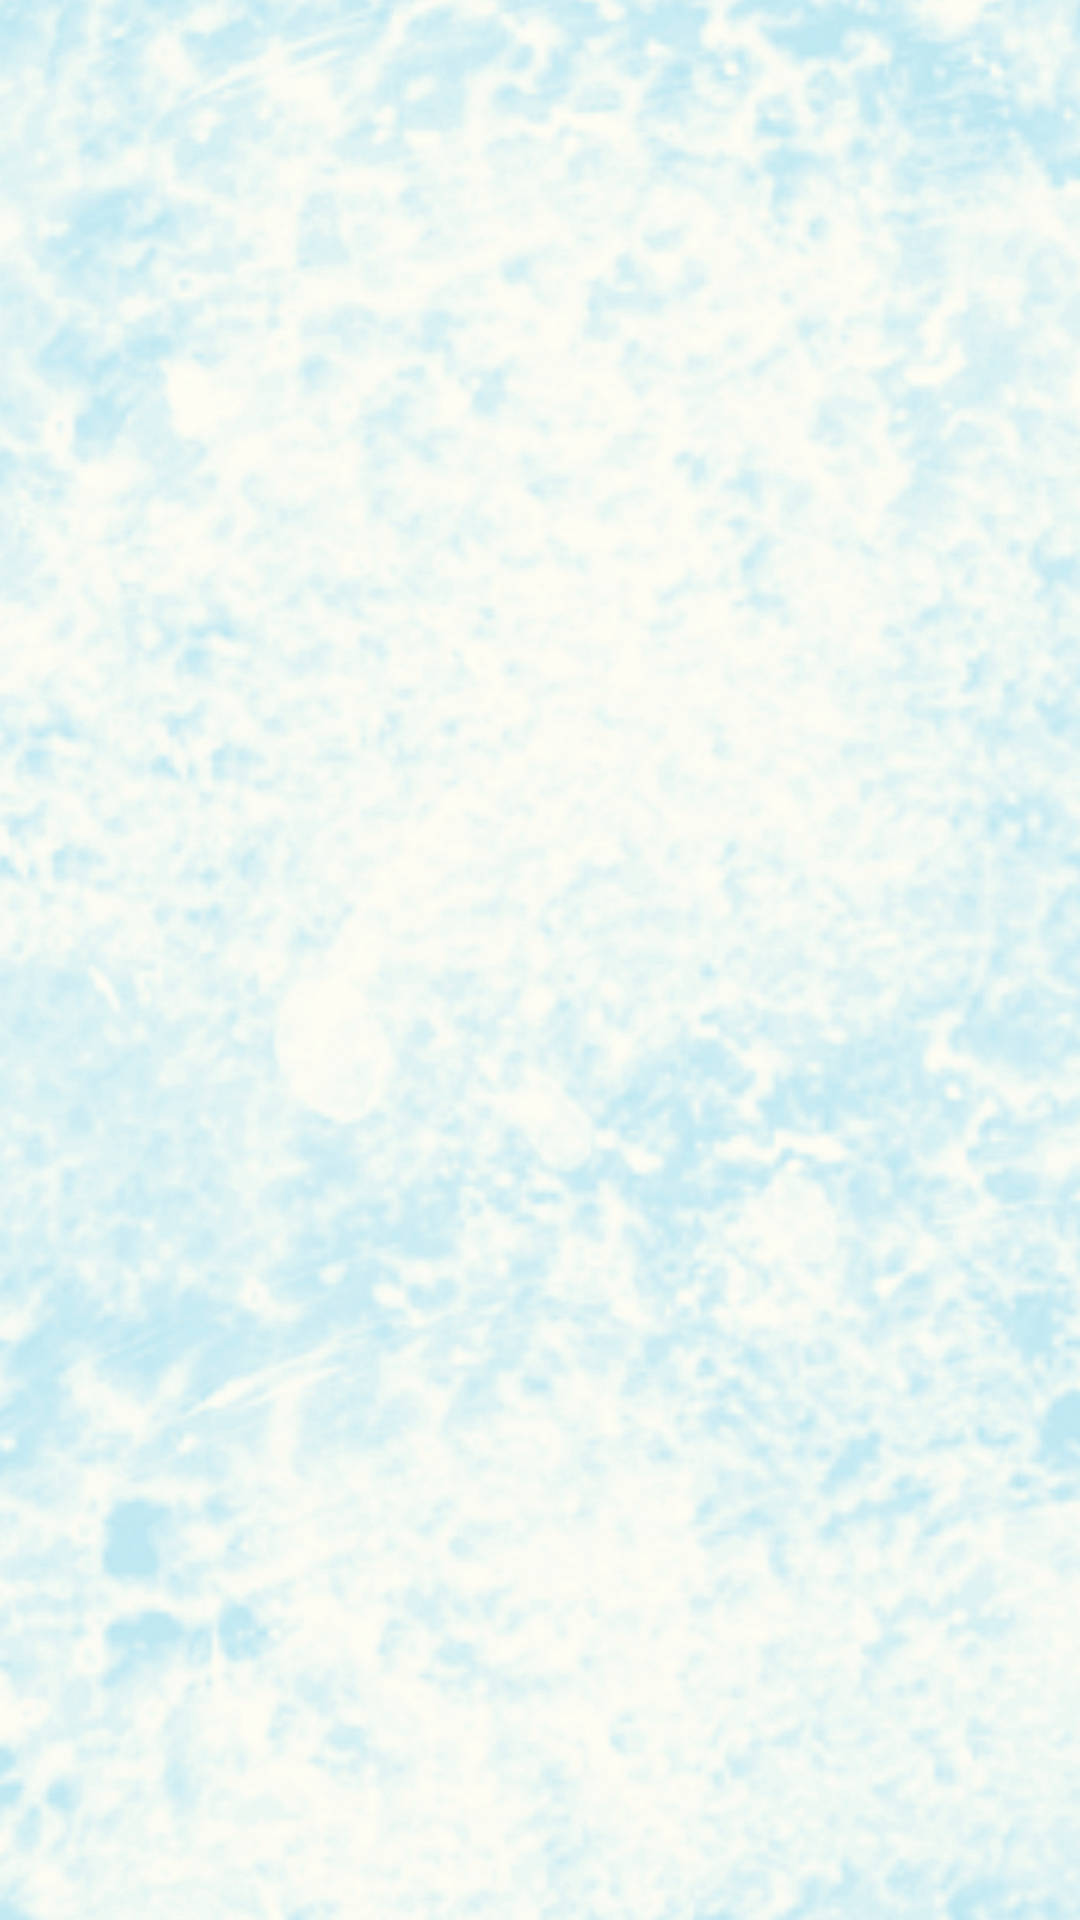 Textured Light Blue Aesthetic Background